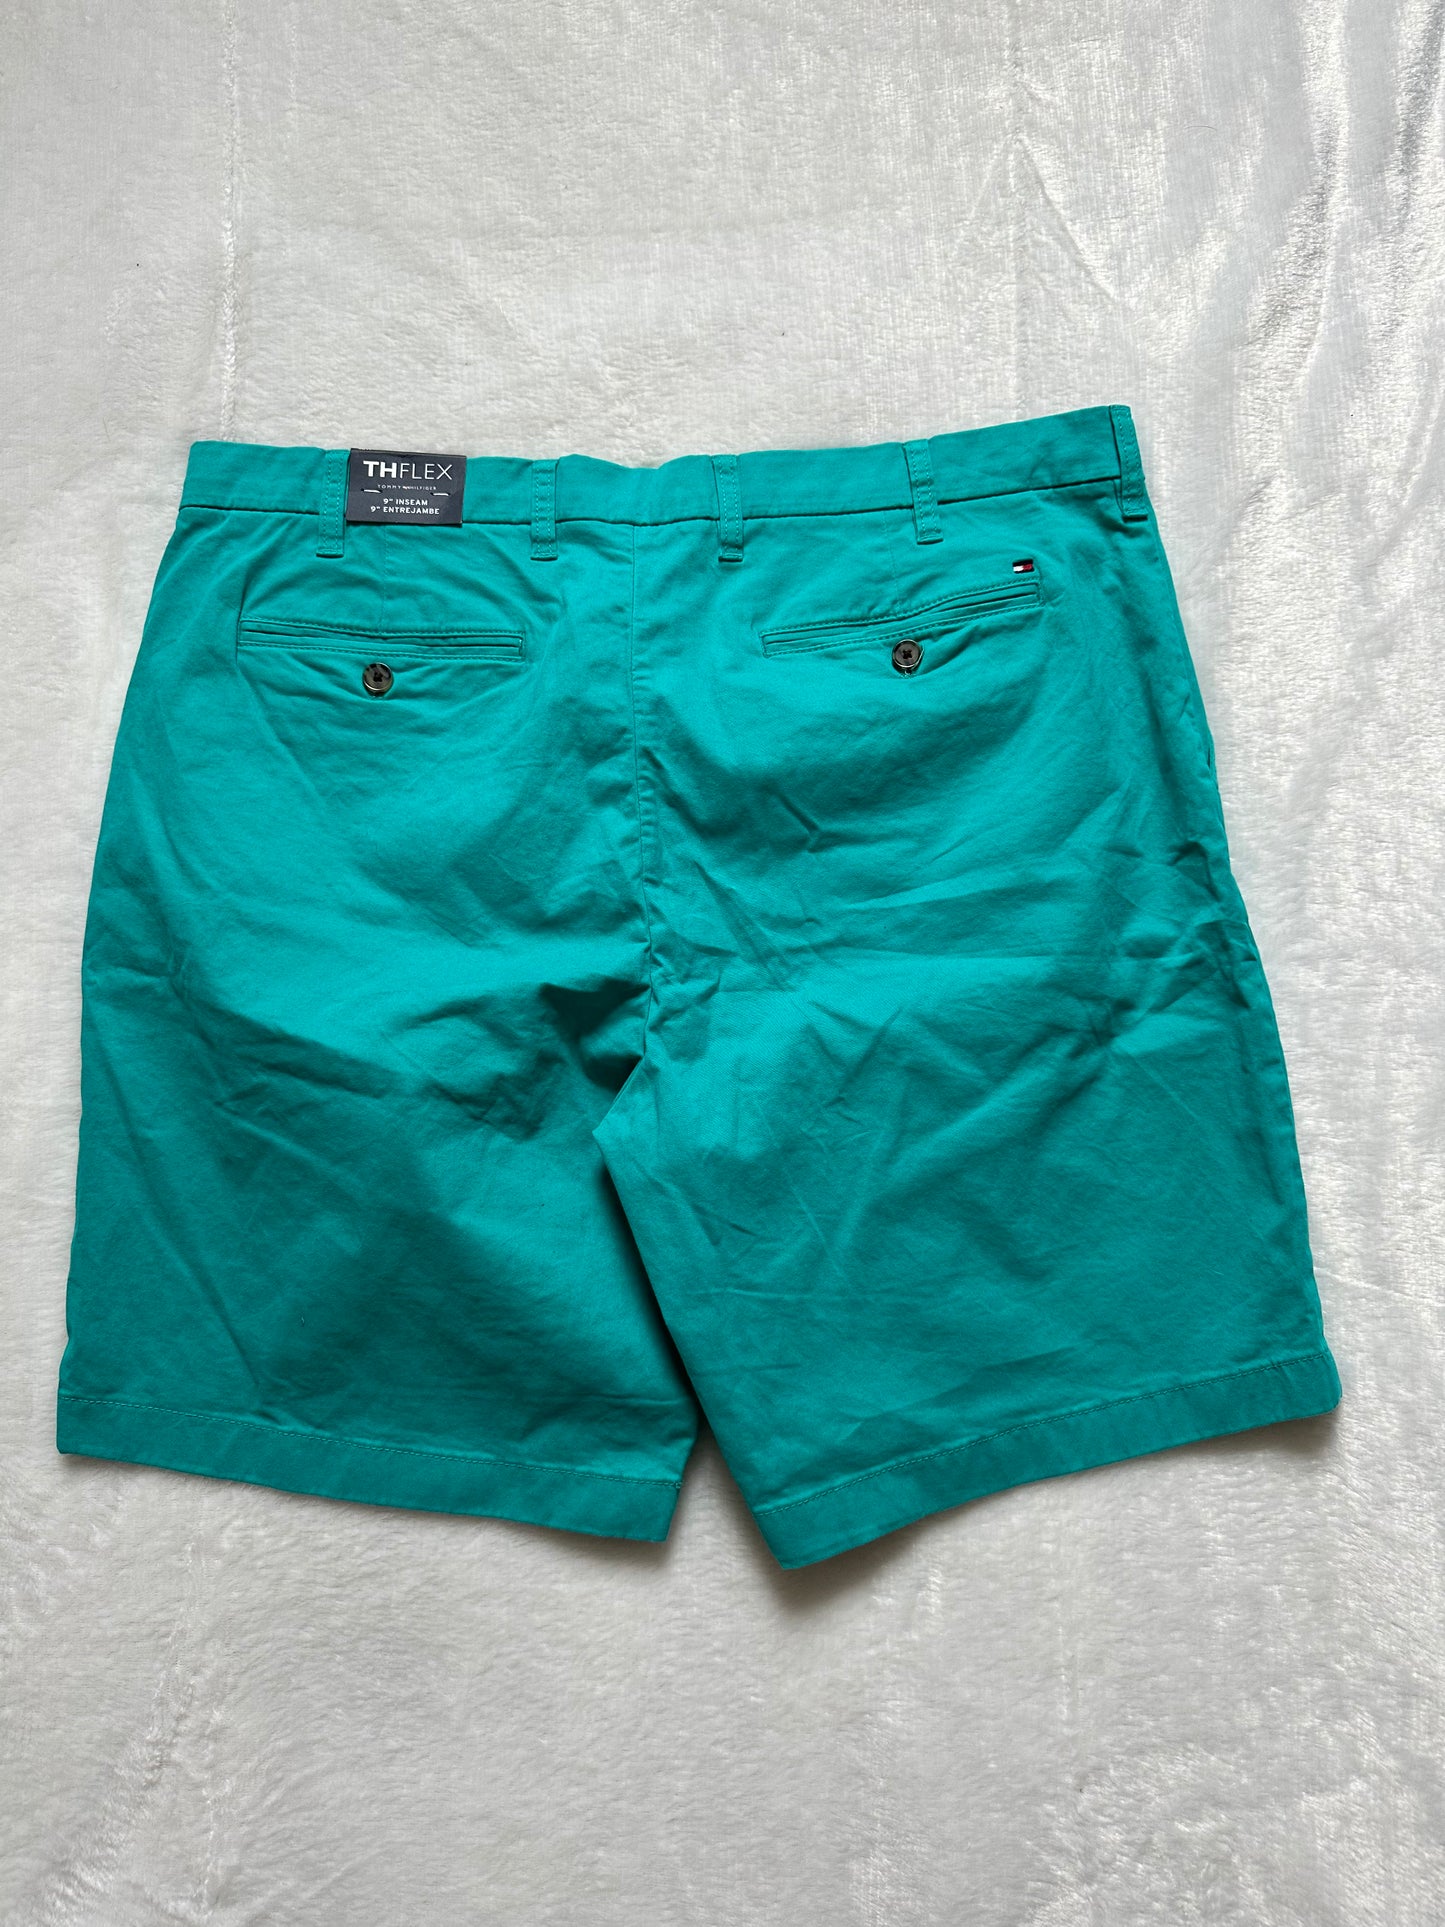 NWT Tommy Hilfiger Men's Shorts - Better World Thrift